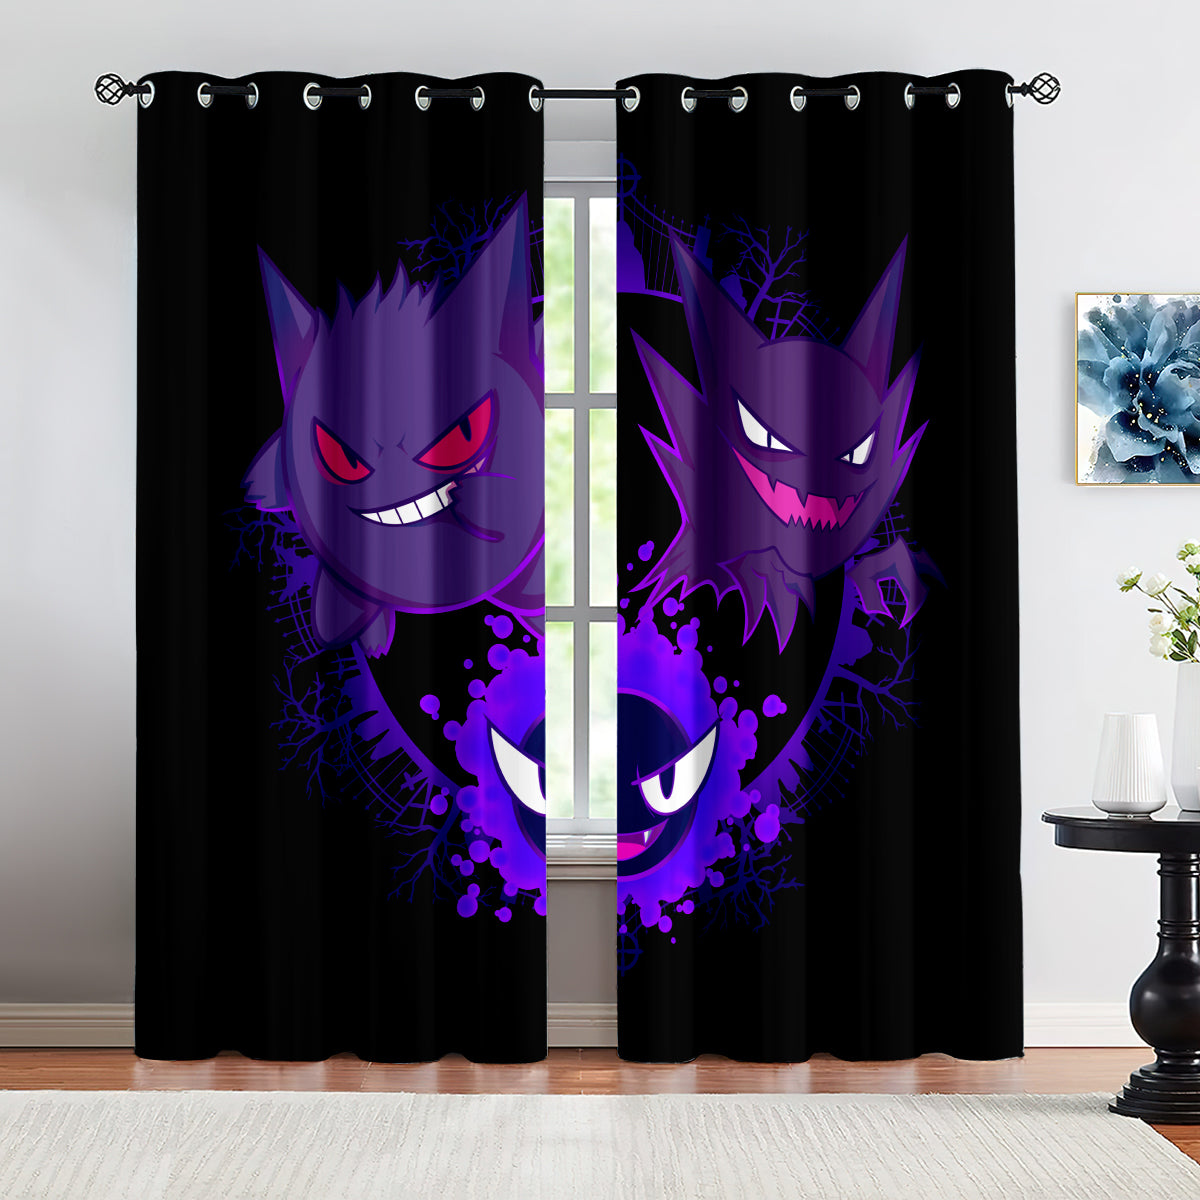 Pokemon Gengar Blackout Curtains Drapes for Window Treatment Set